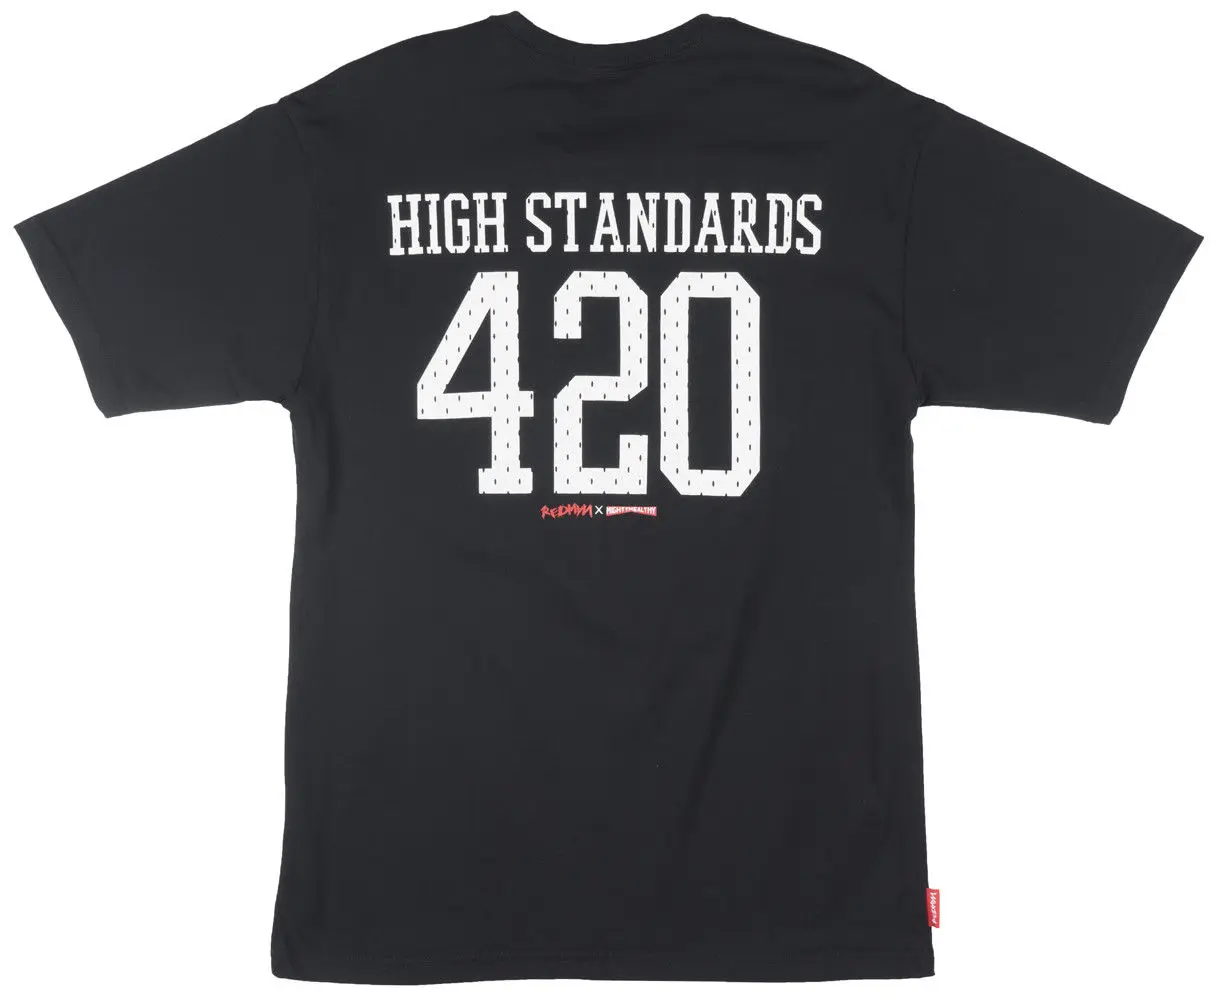 Mighty healthy black t shirt 928